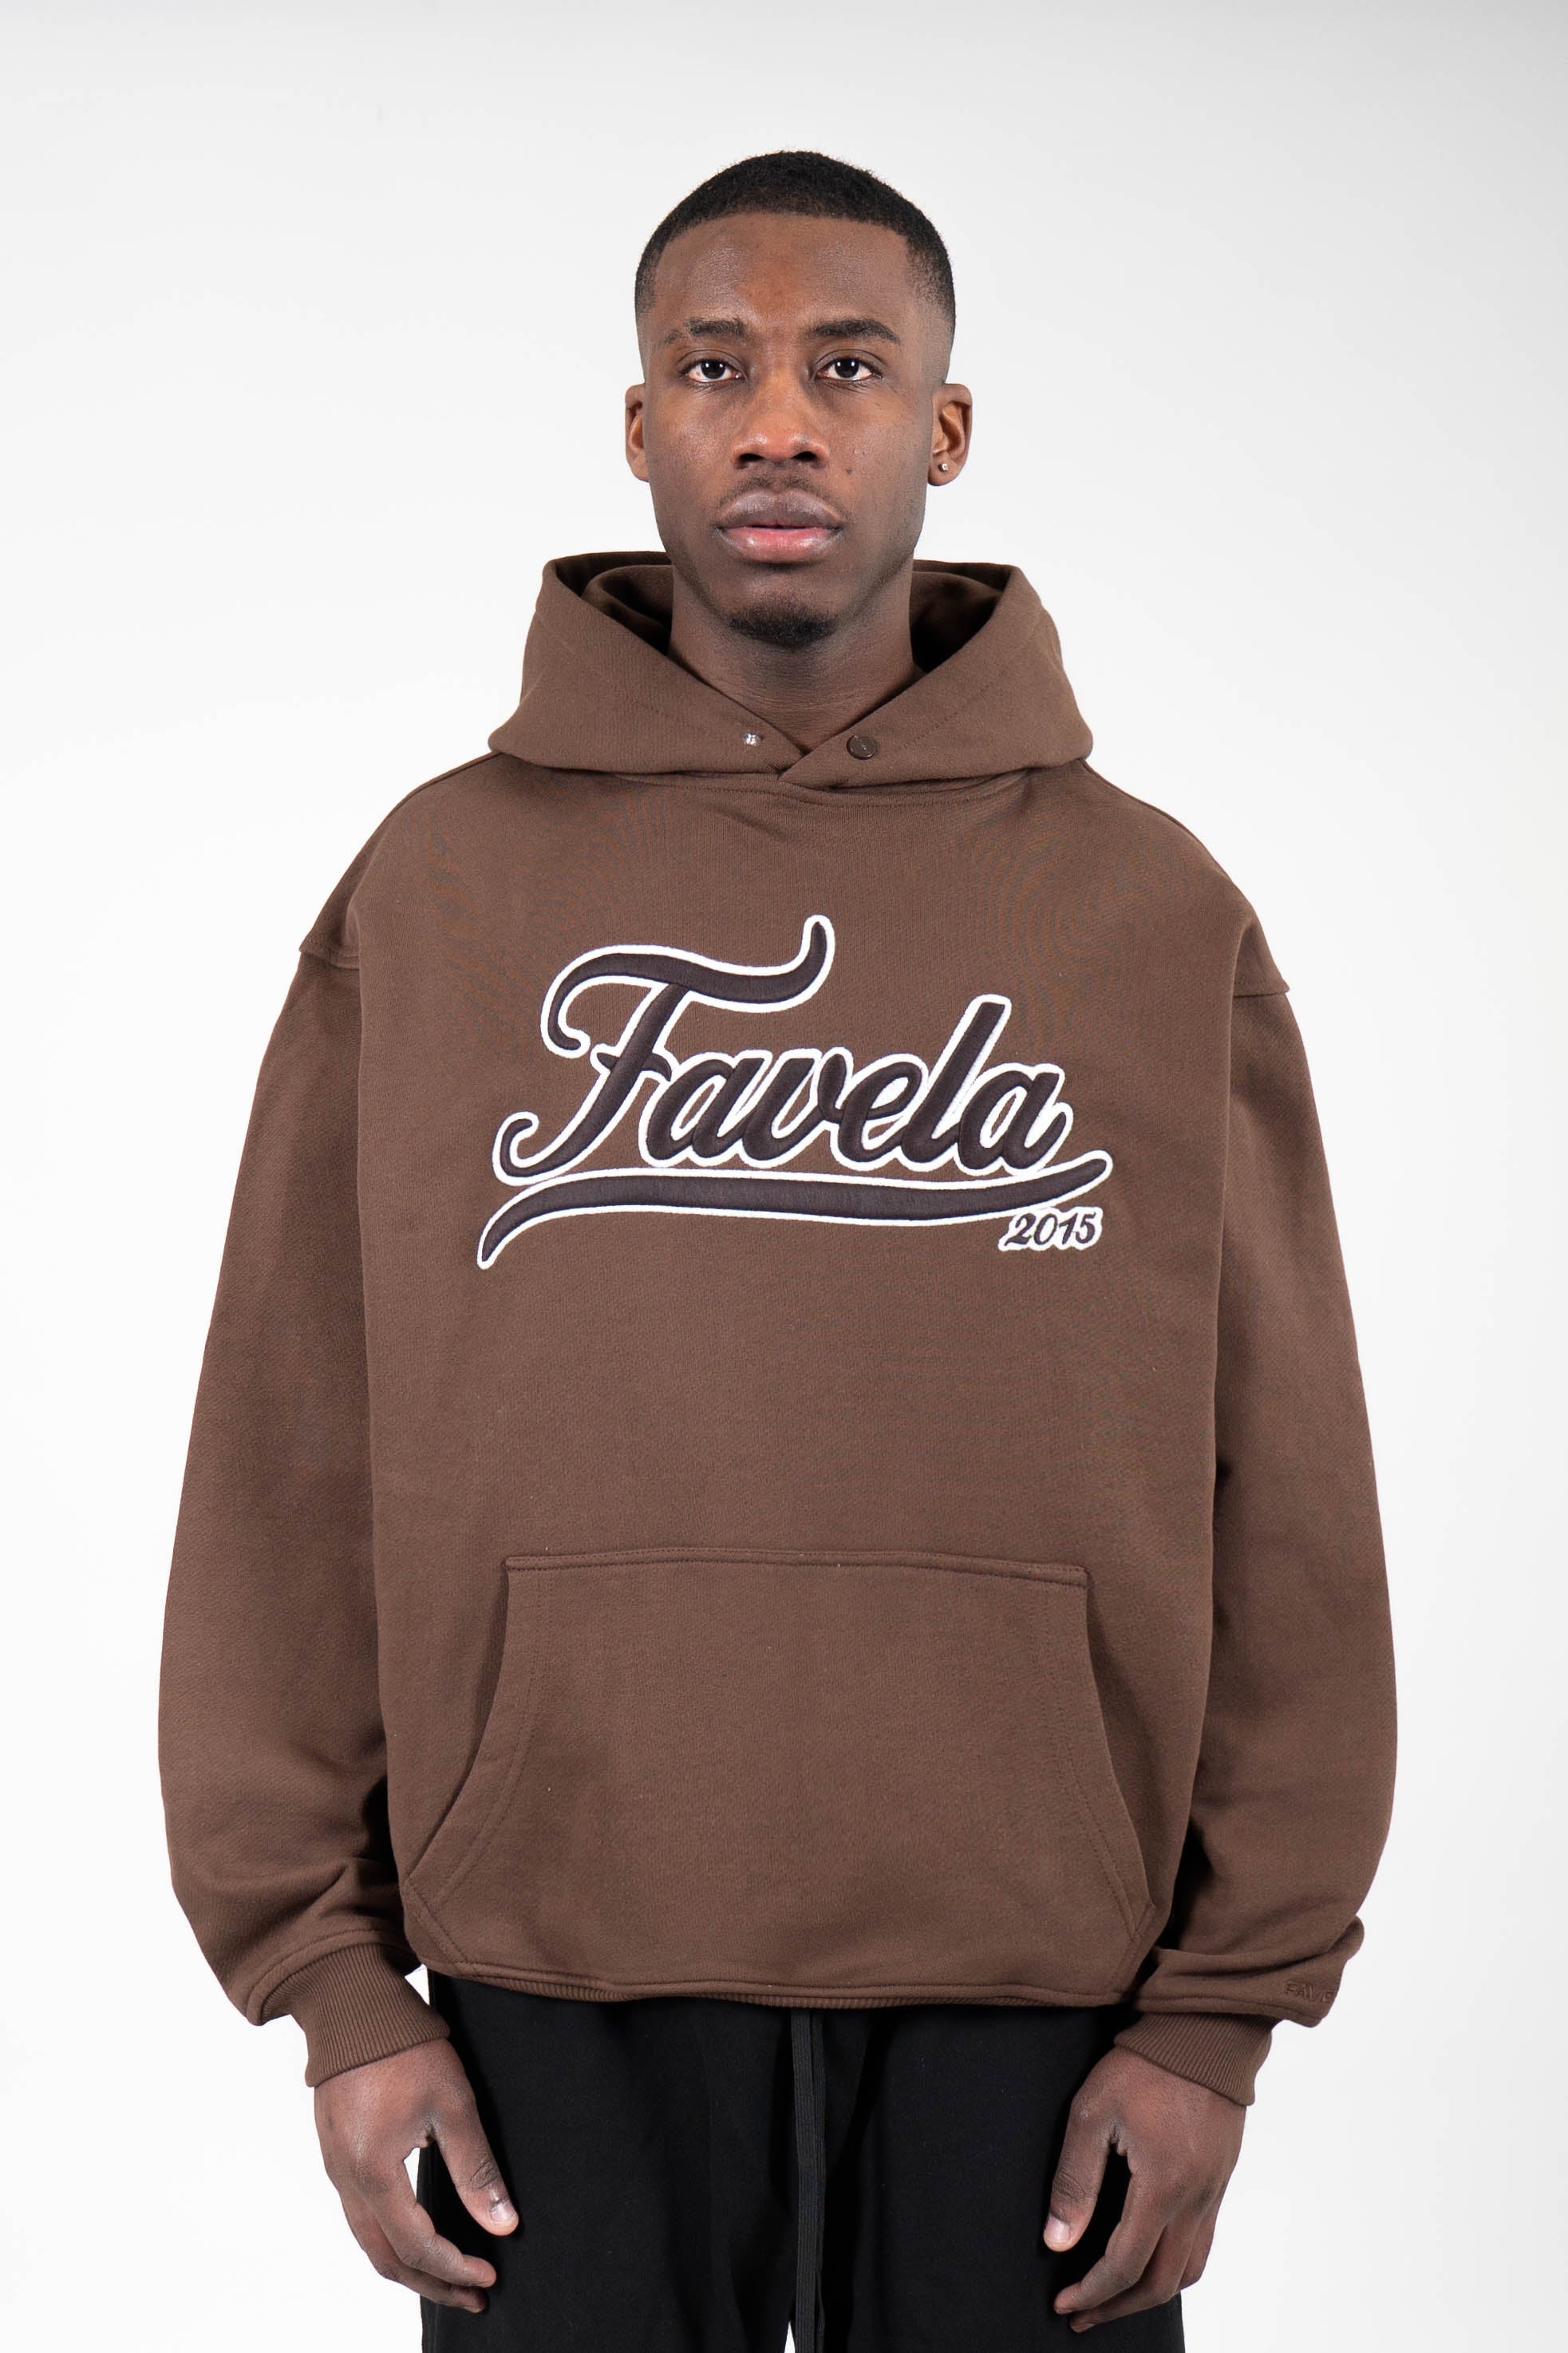 Favela Clothing Model - Brauner Hoodie